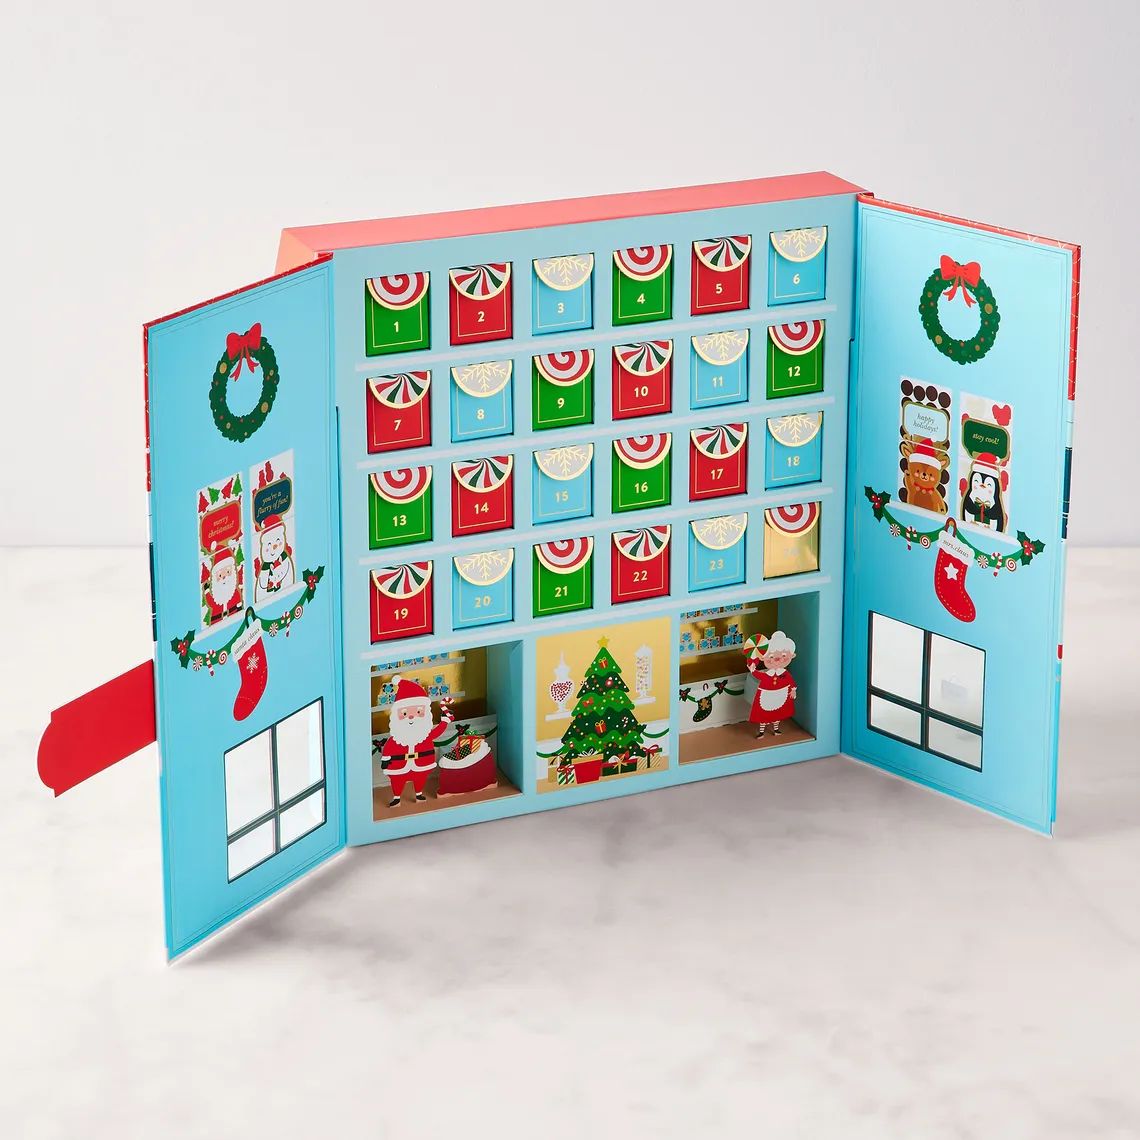 Sugarfina Santa’s Candy Shop Advent Calendar | Food52